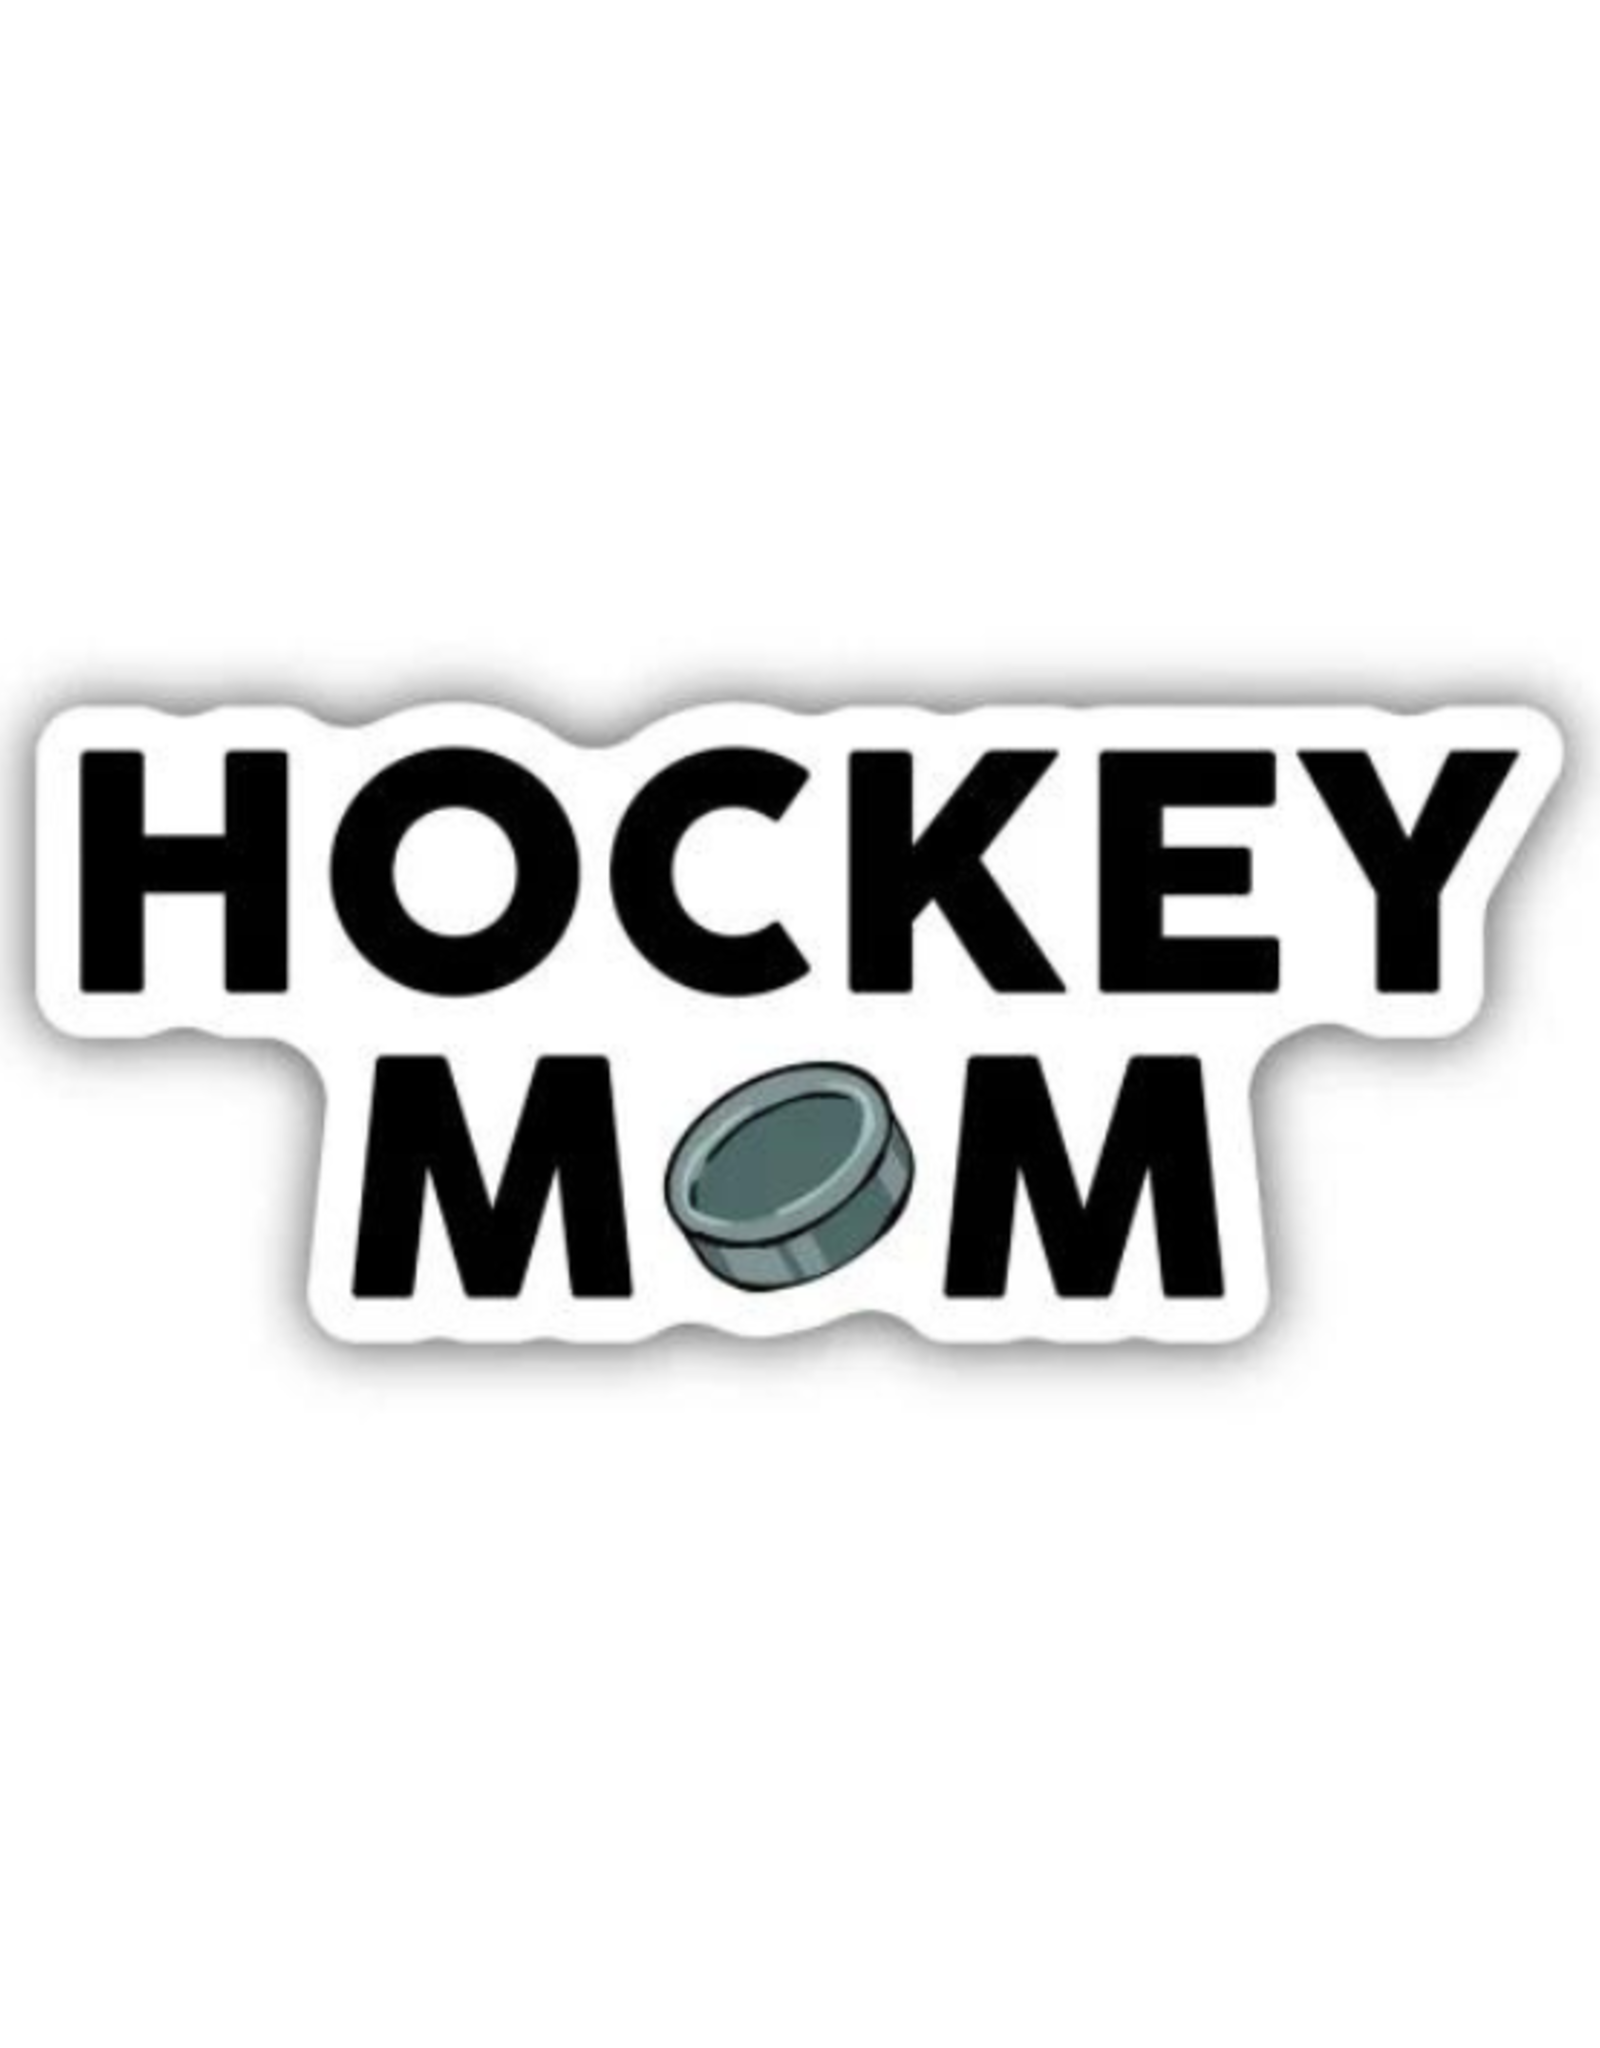 Stickers Northwest Inc. Stickers Northwest Inc. - Hockey Mom Sticker